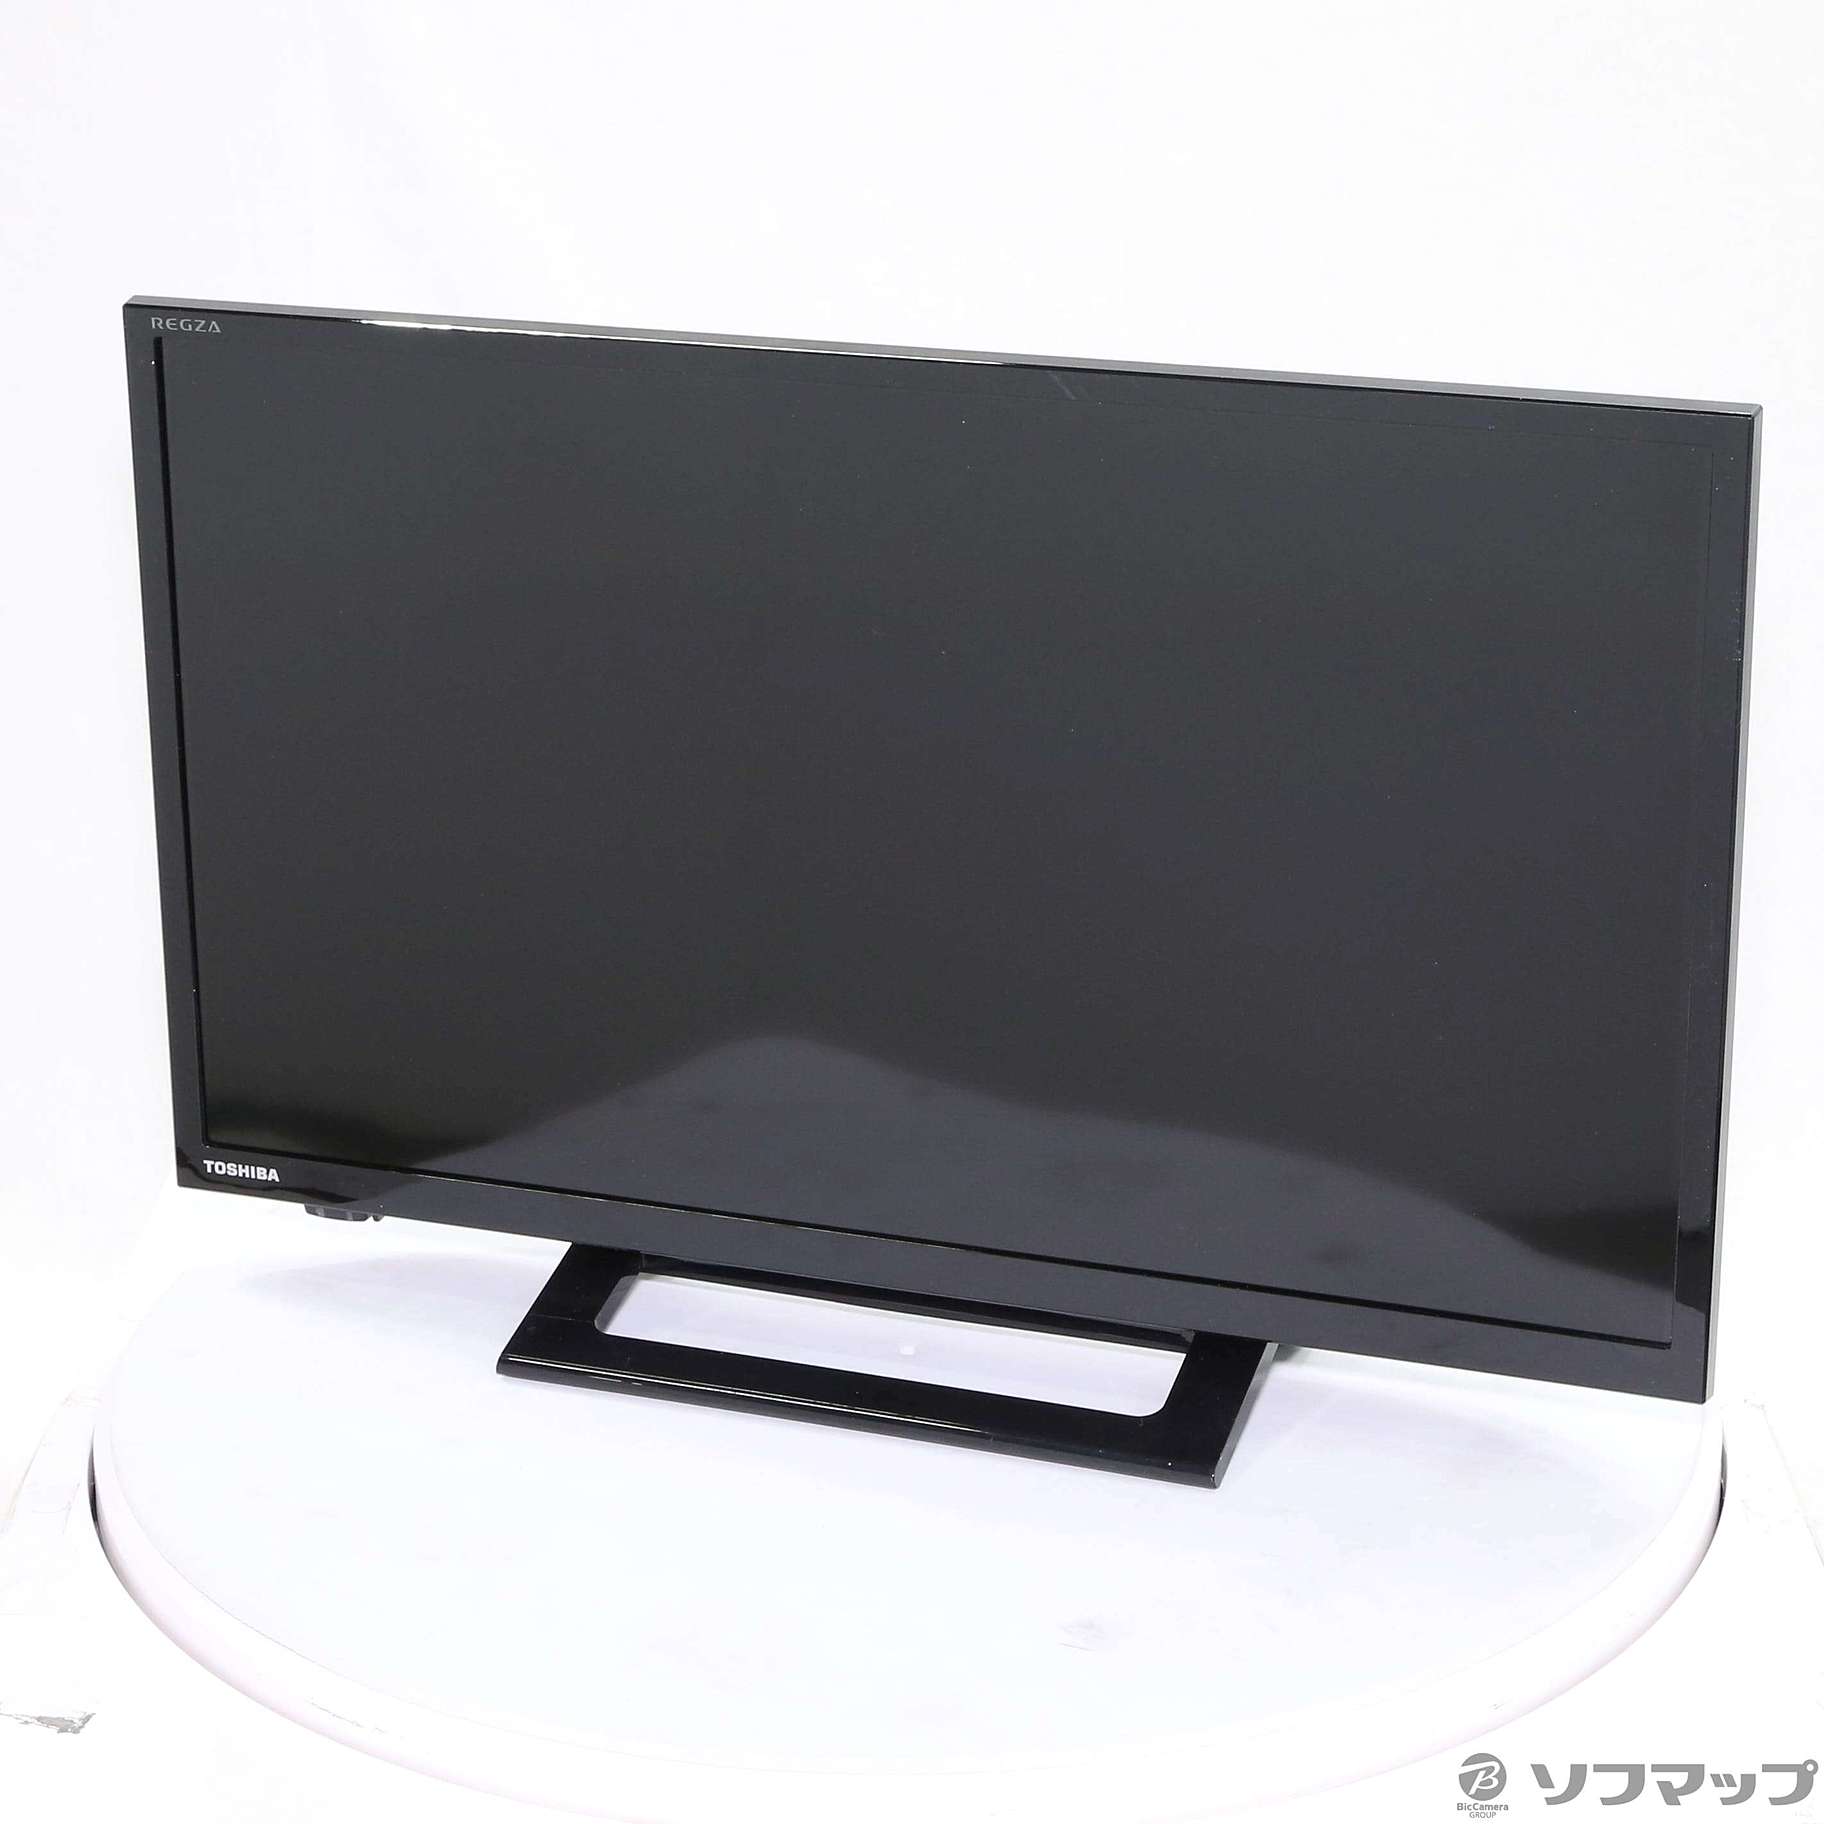 REGZA 24S24 東芝 24V型デジタルハイビジョン液晶テレビ - TV 